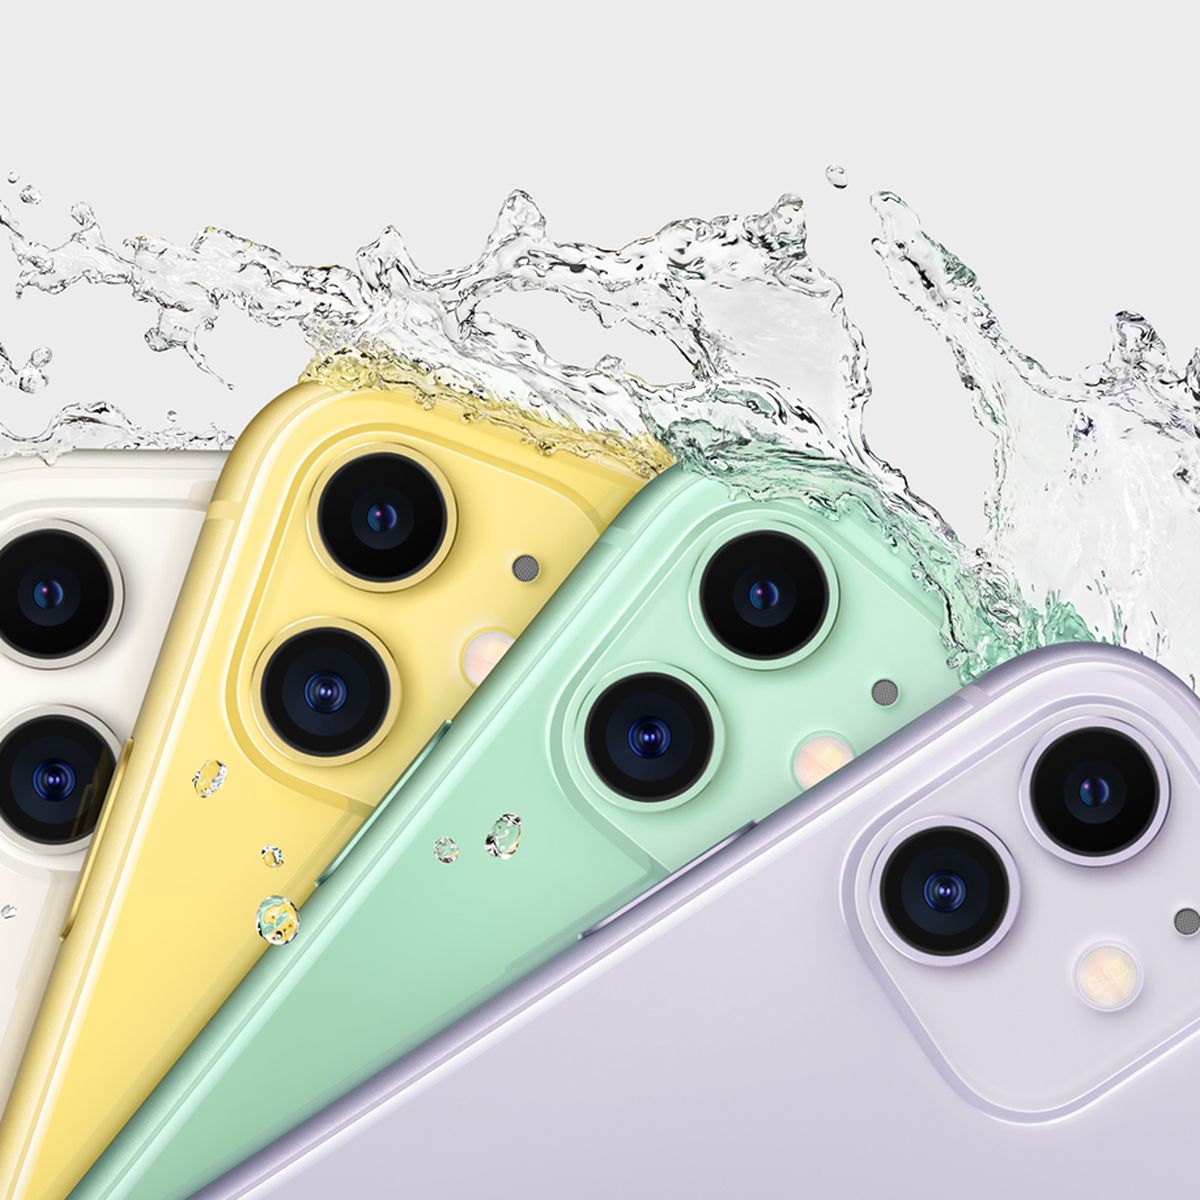 IPhone 11 Water Resistance: Understanding Its Resistance To Water